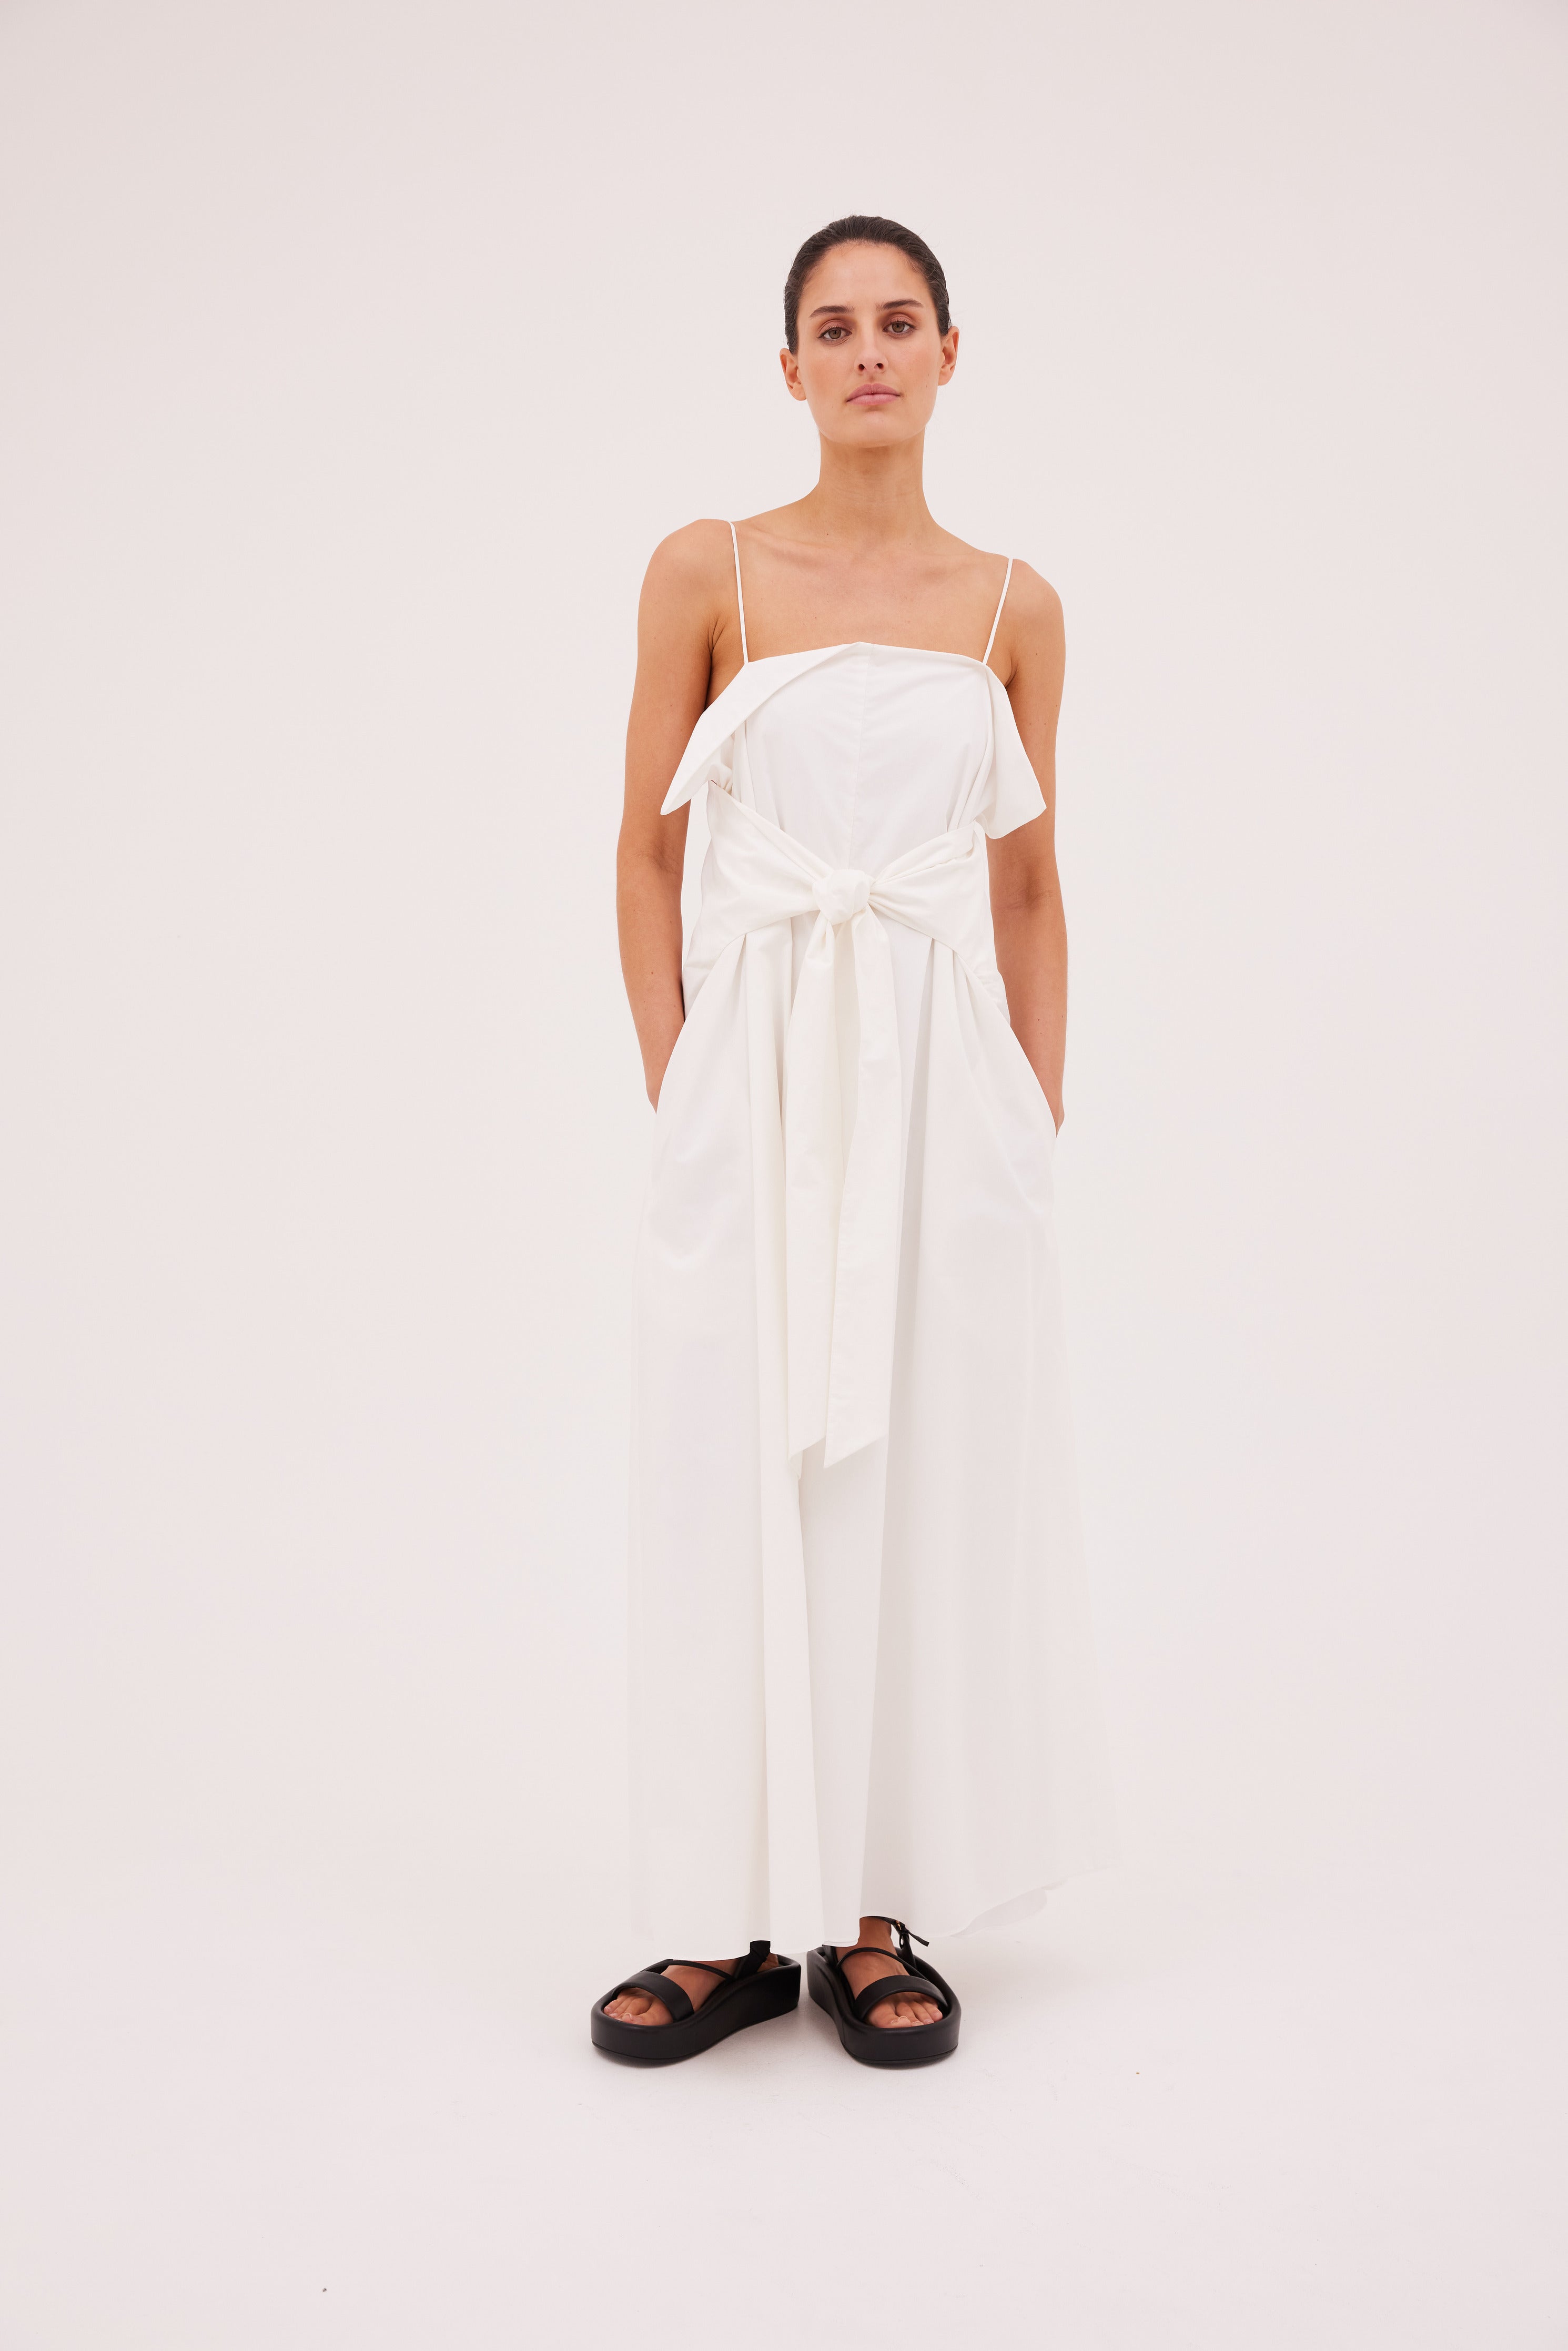 WHITE COTTON VALETTA DRESS – Bianca Spender